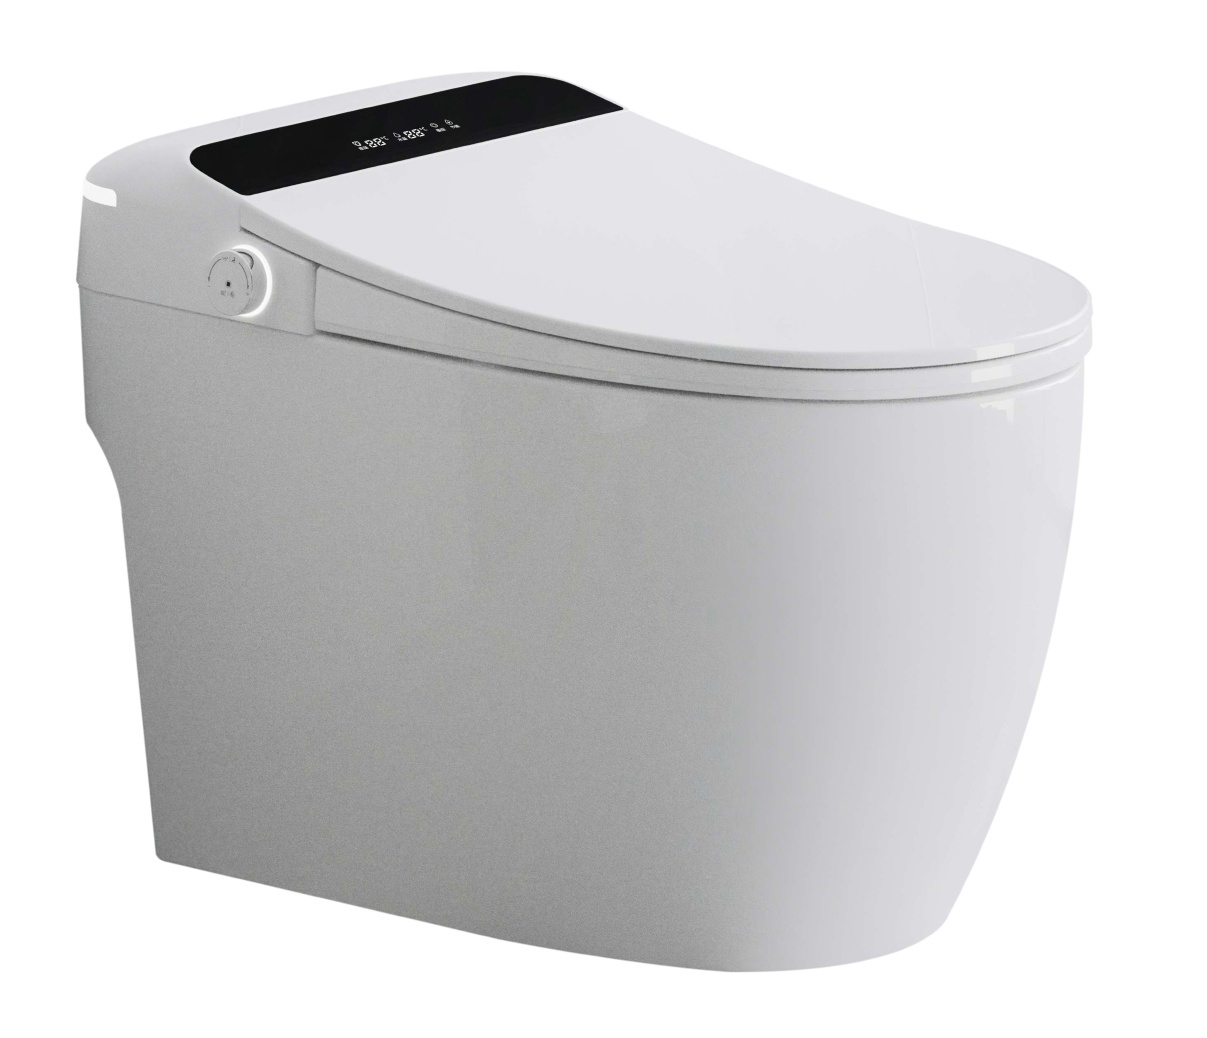 Intelligent smart toilet H-5002